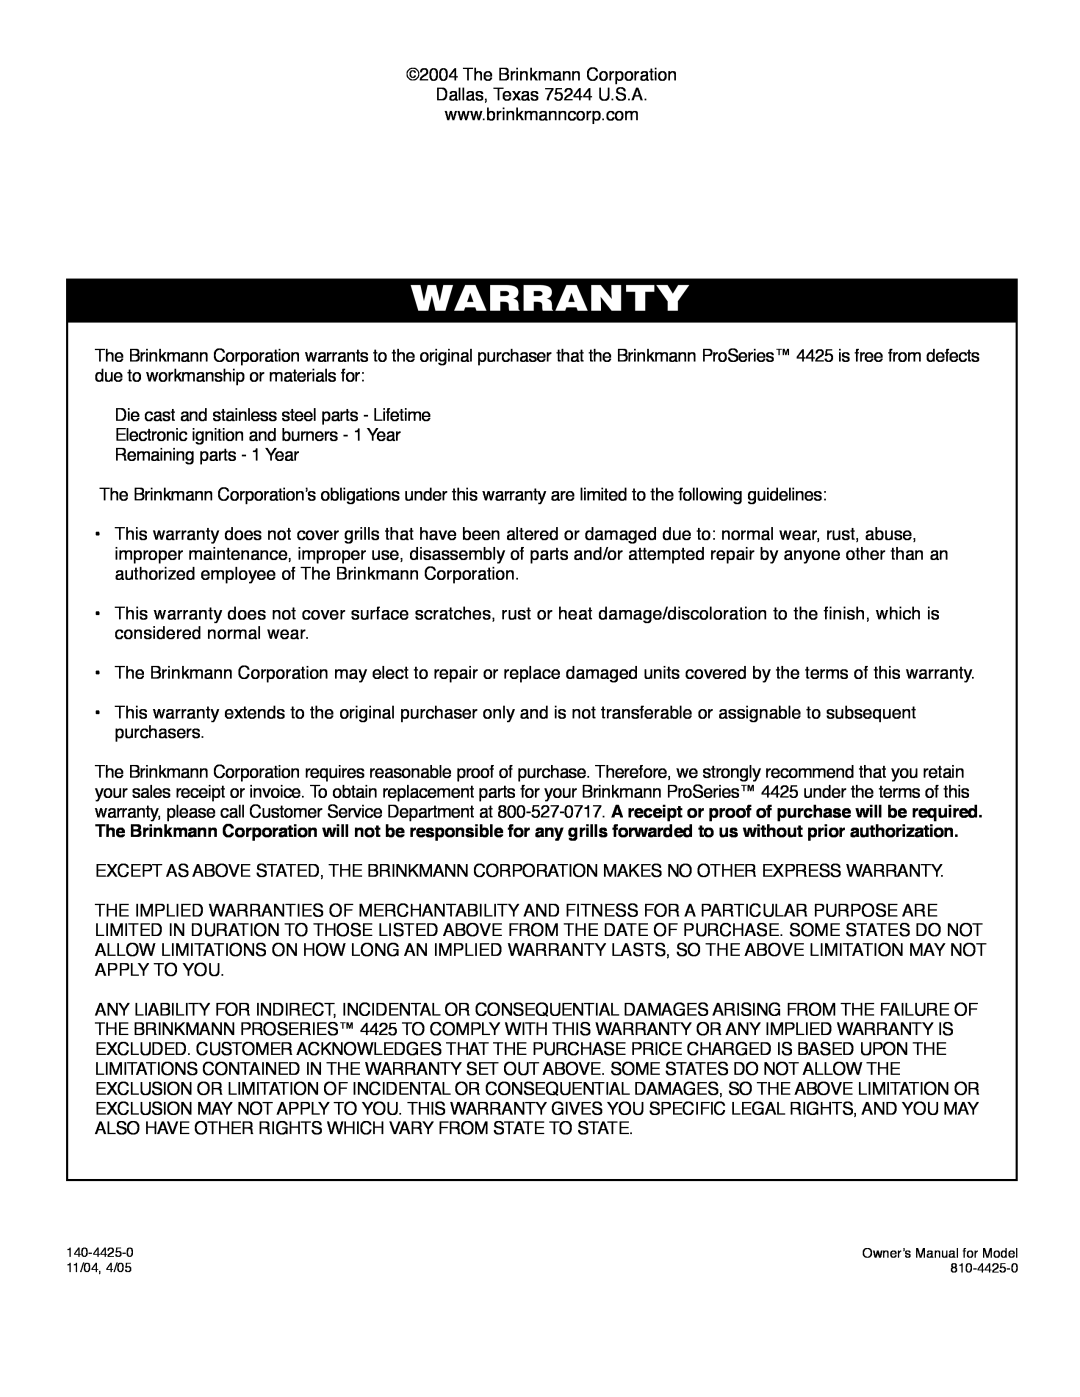 Brinkmann 4425 owner manual Warranty 